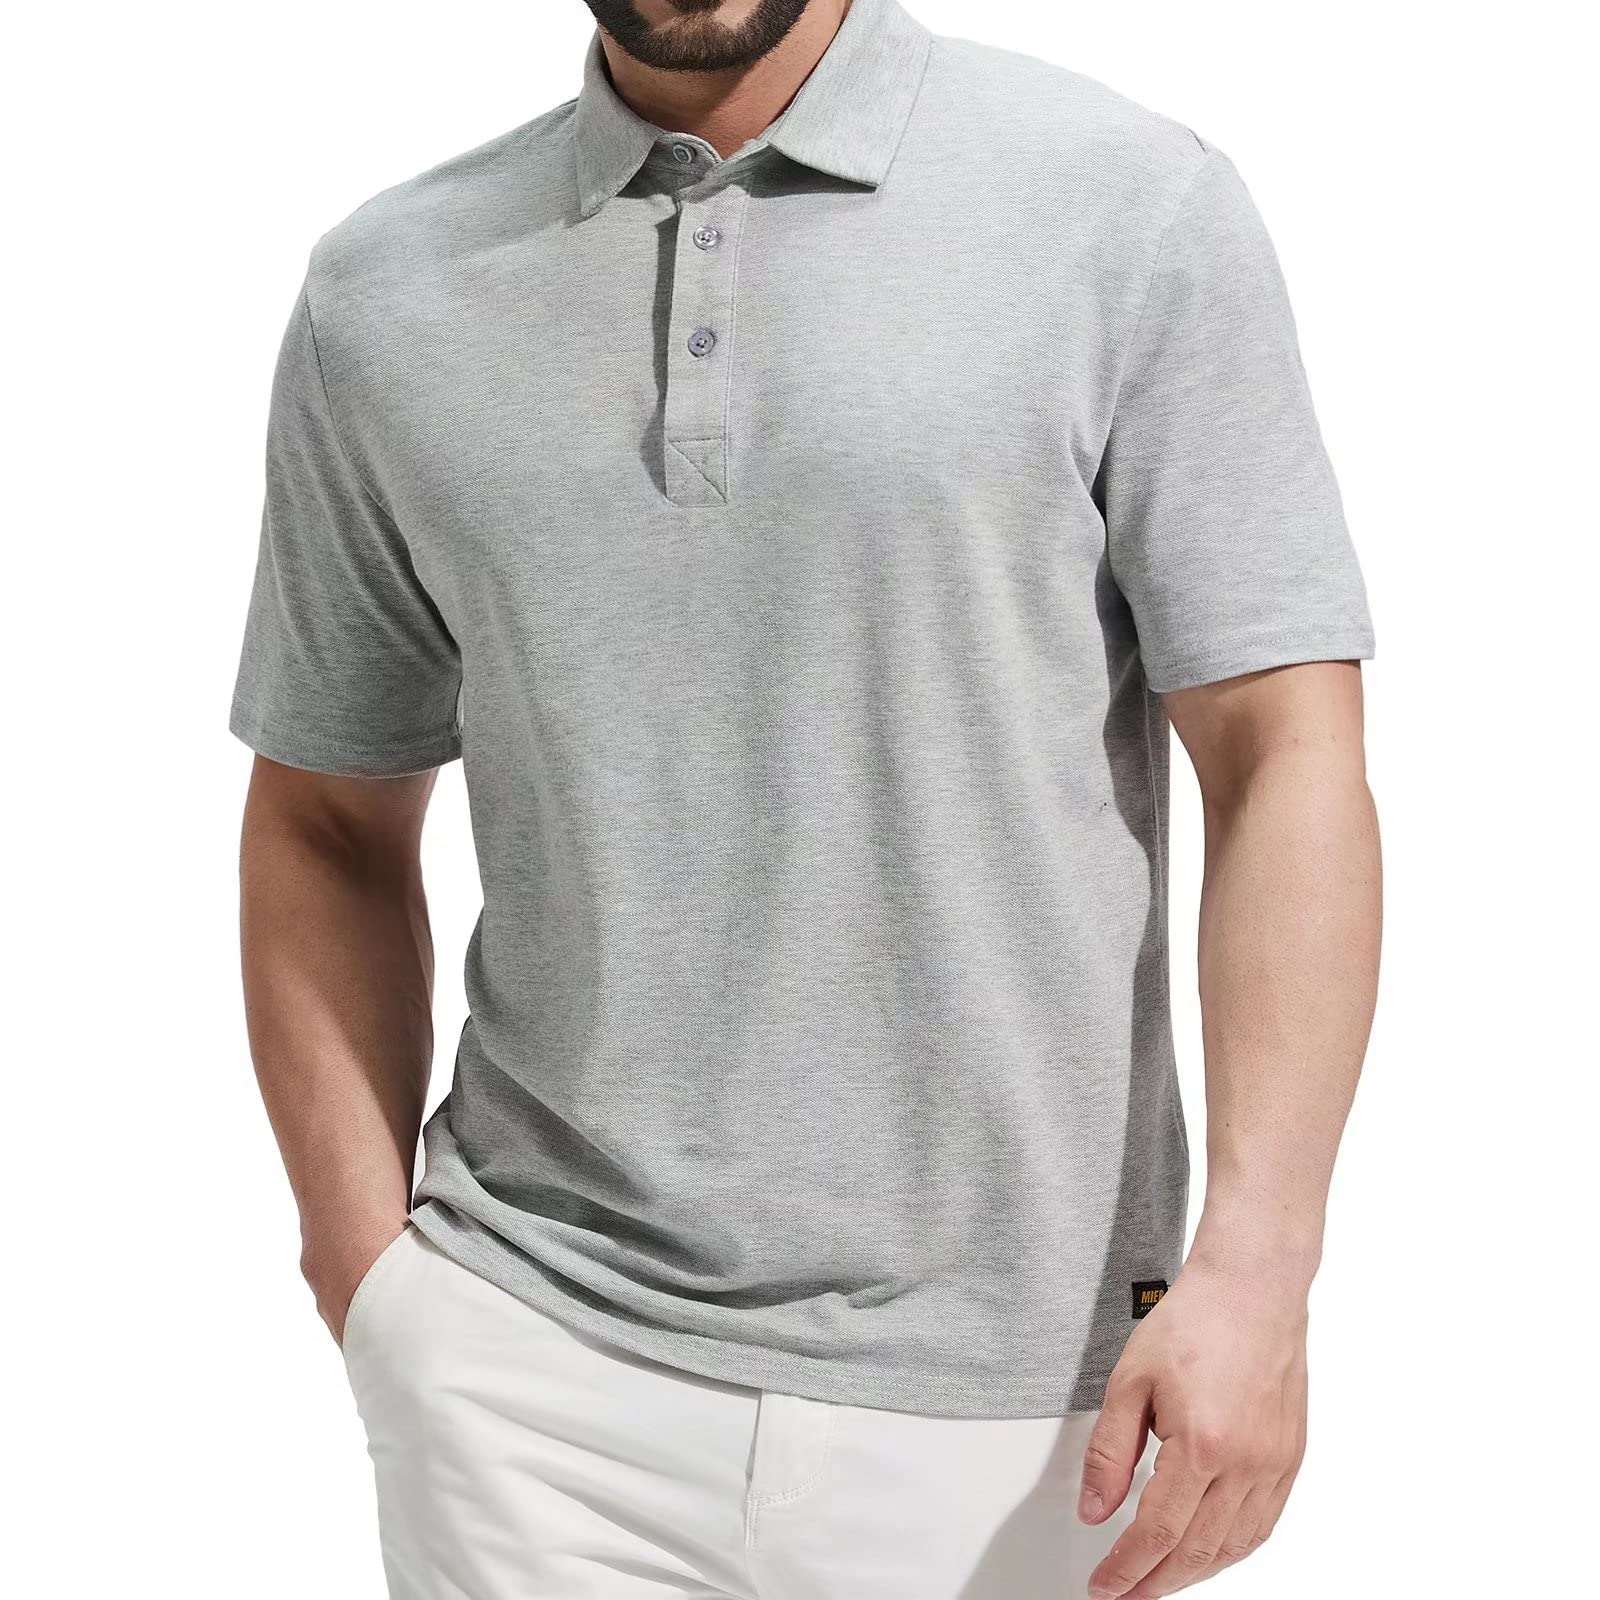 Haimont Men's Cotton Polo Shirts Soft Golf T-Shirts